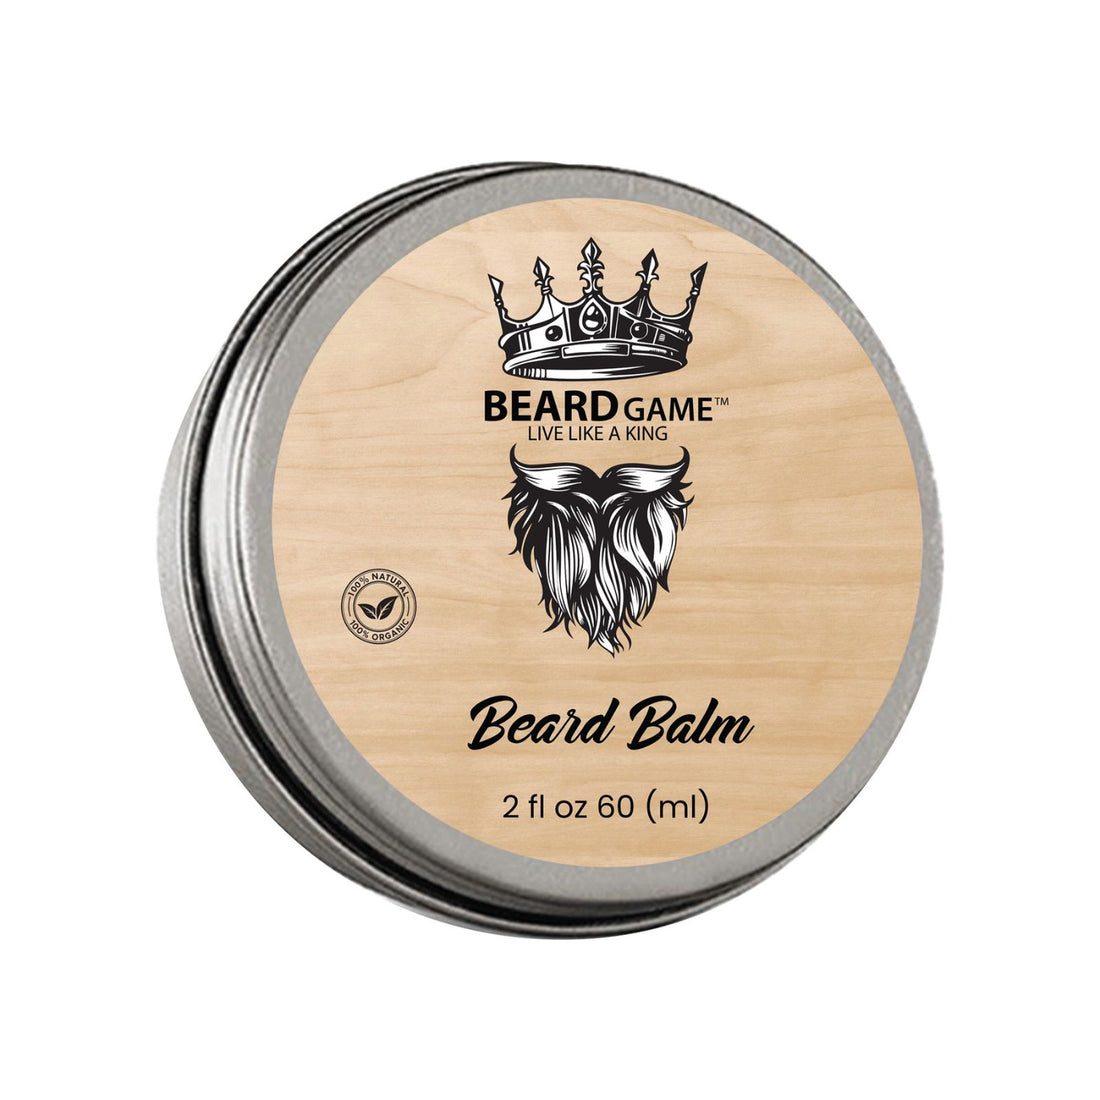 Beard Game Bread Balm for Beard Hair Growth (2oz)